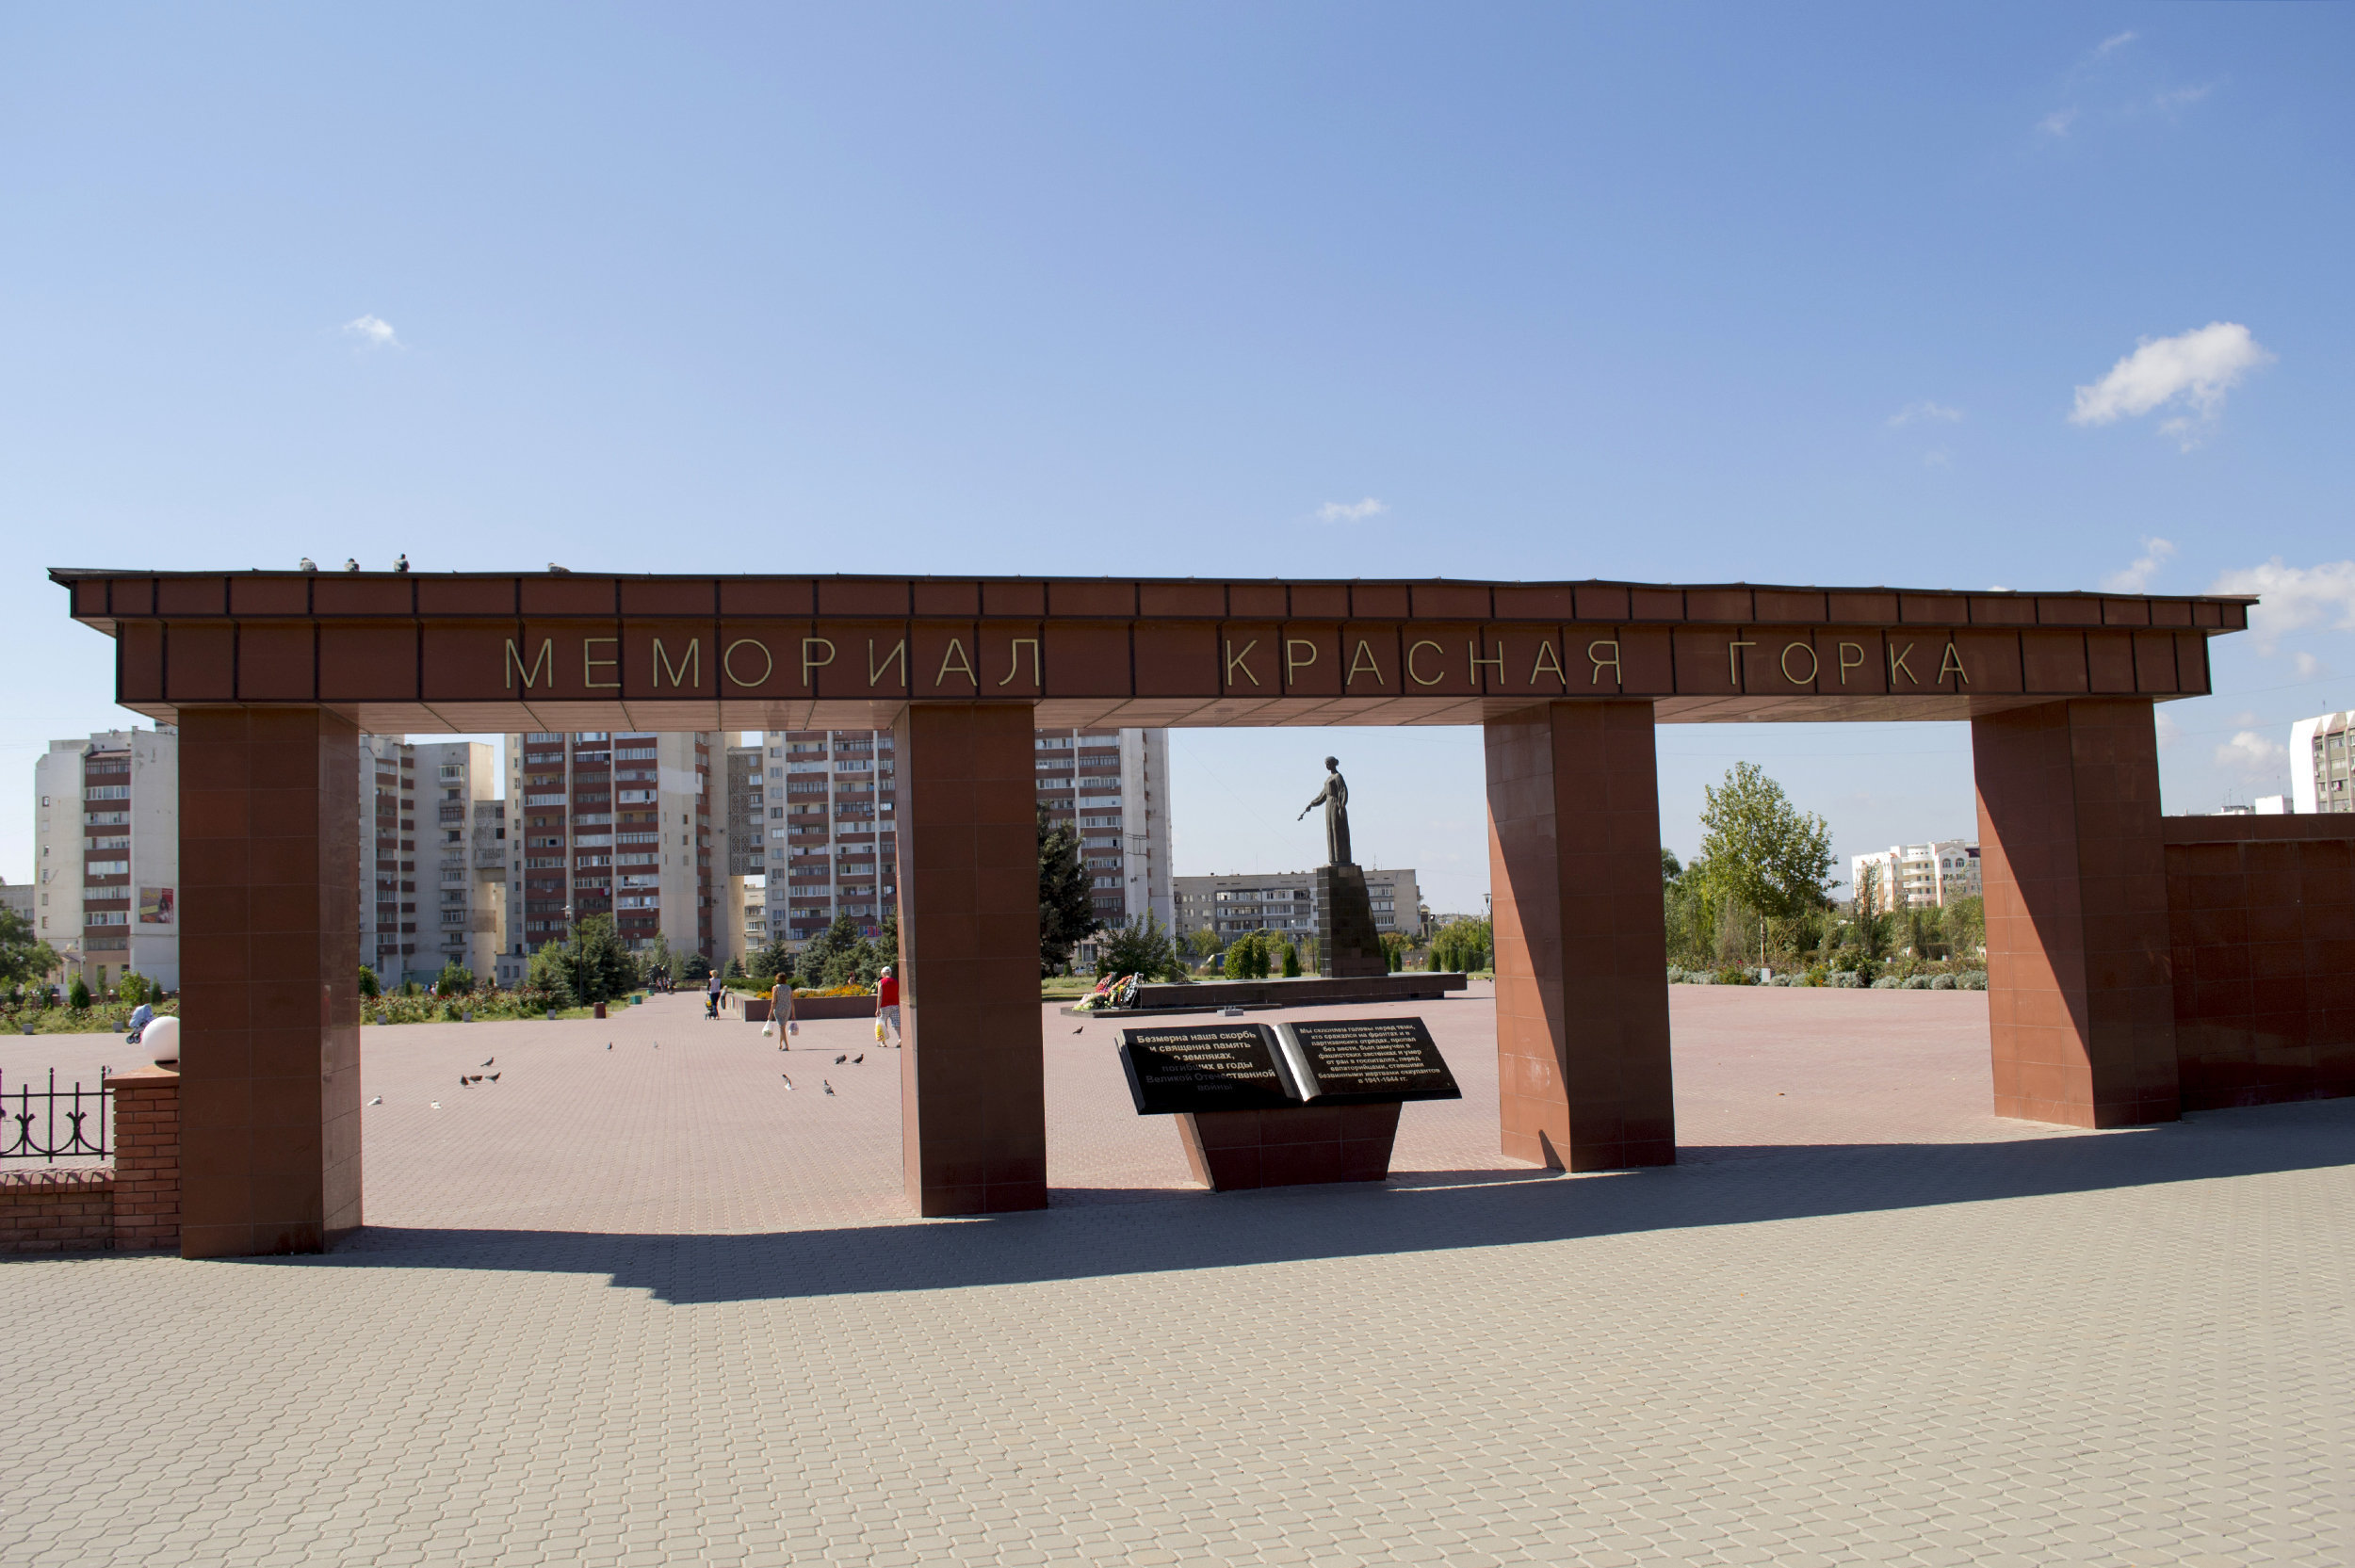 Krasnaya Gorka memorial complex